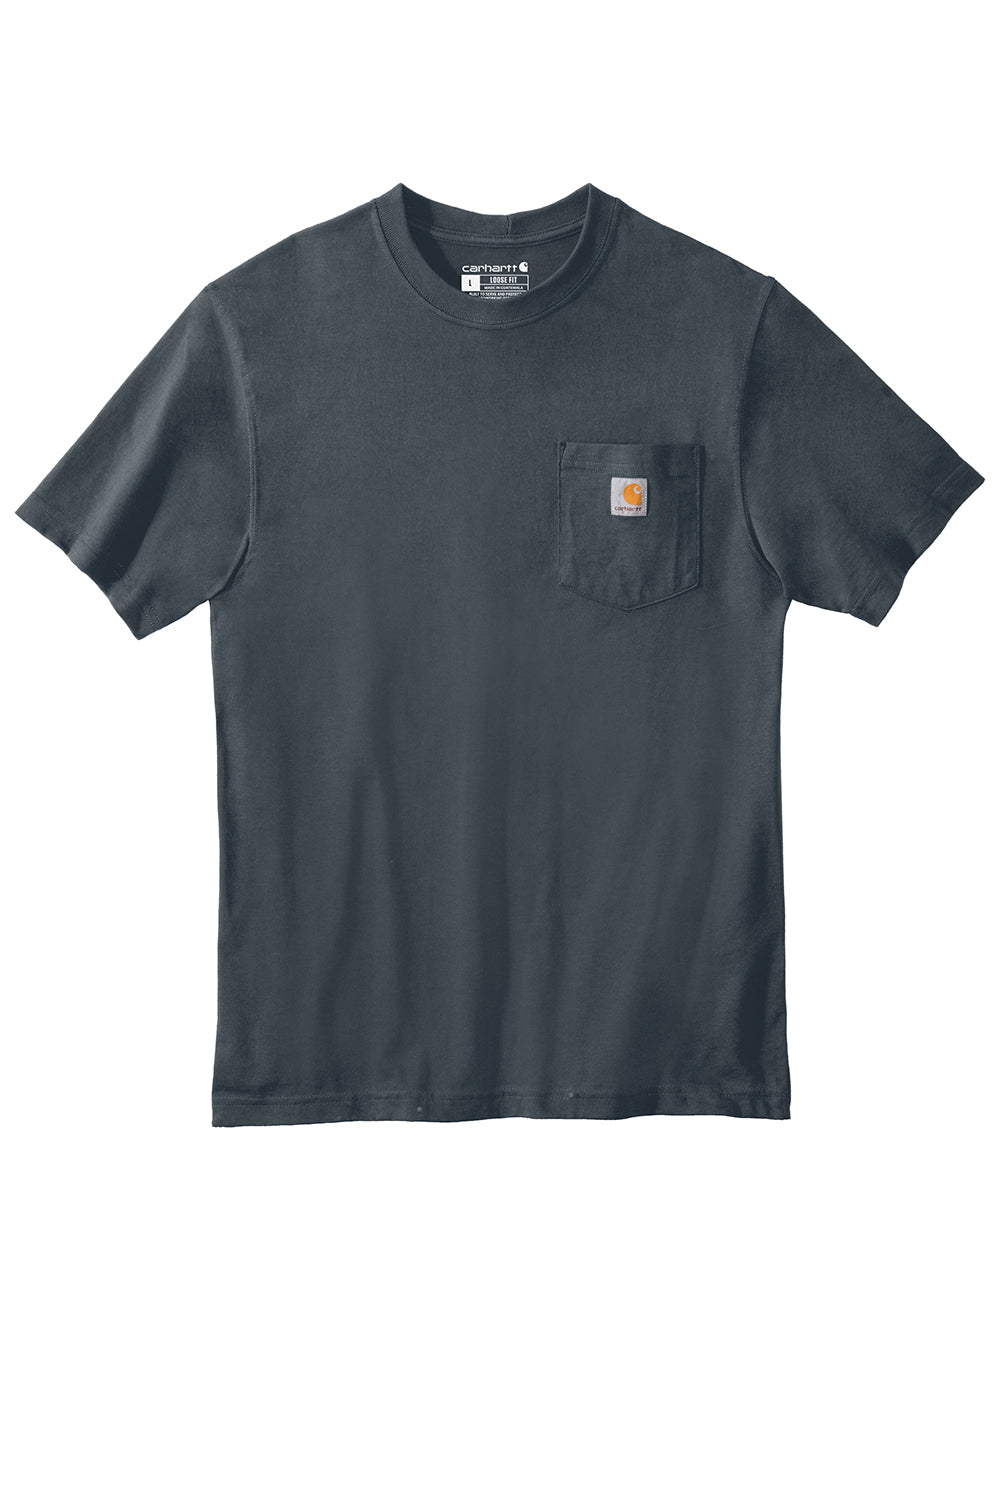 Carhartt CTK87/CTTK87 Mens Workwear Short Sleeve Crewneck T-Shirt w/ Pocket Bluestone Flat Front